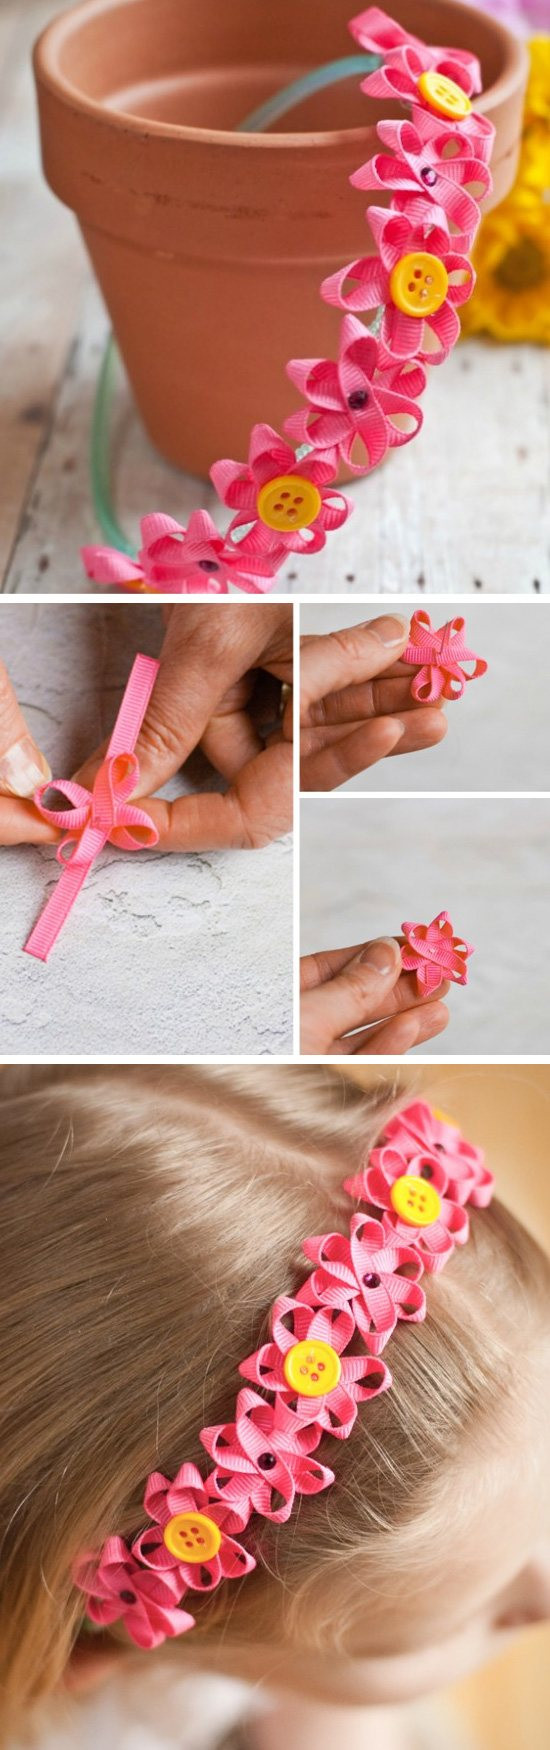 DIY Crafts For Toddlers
 30 Creative DIY Spring Crafts for Kids